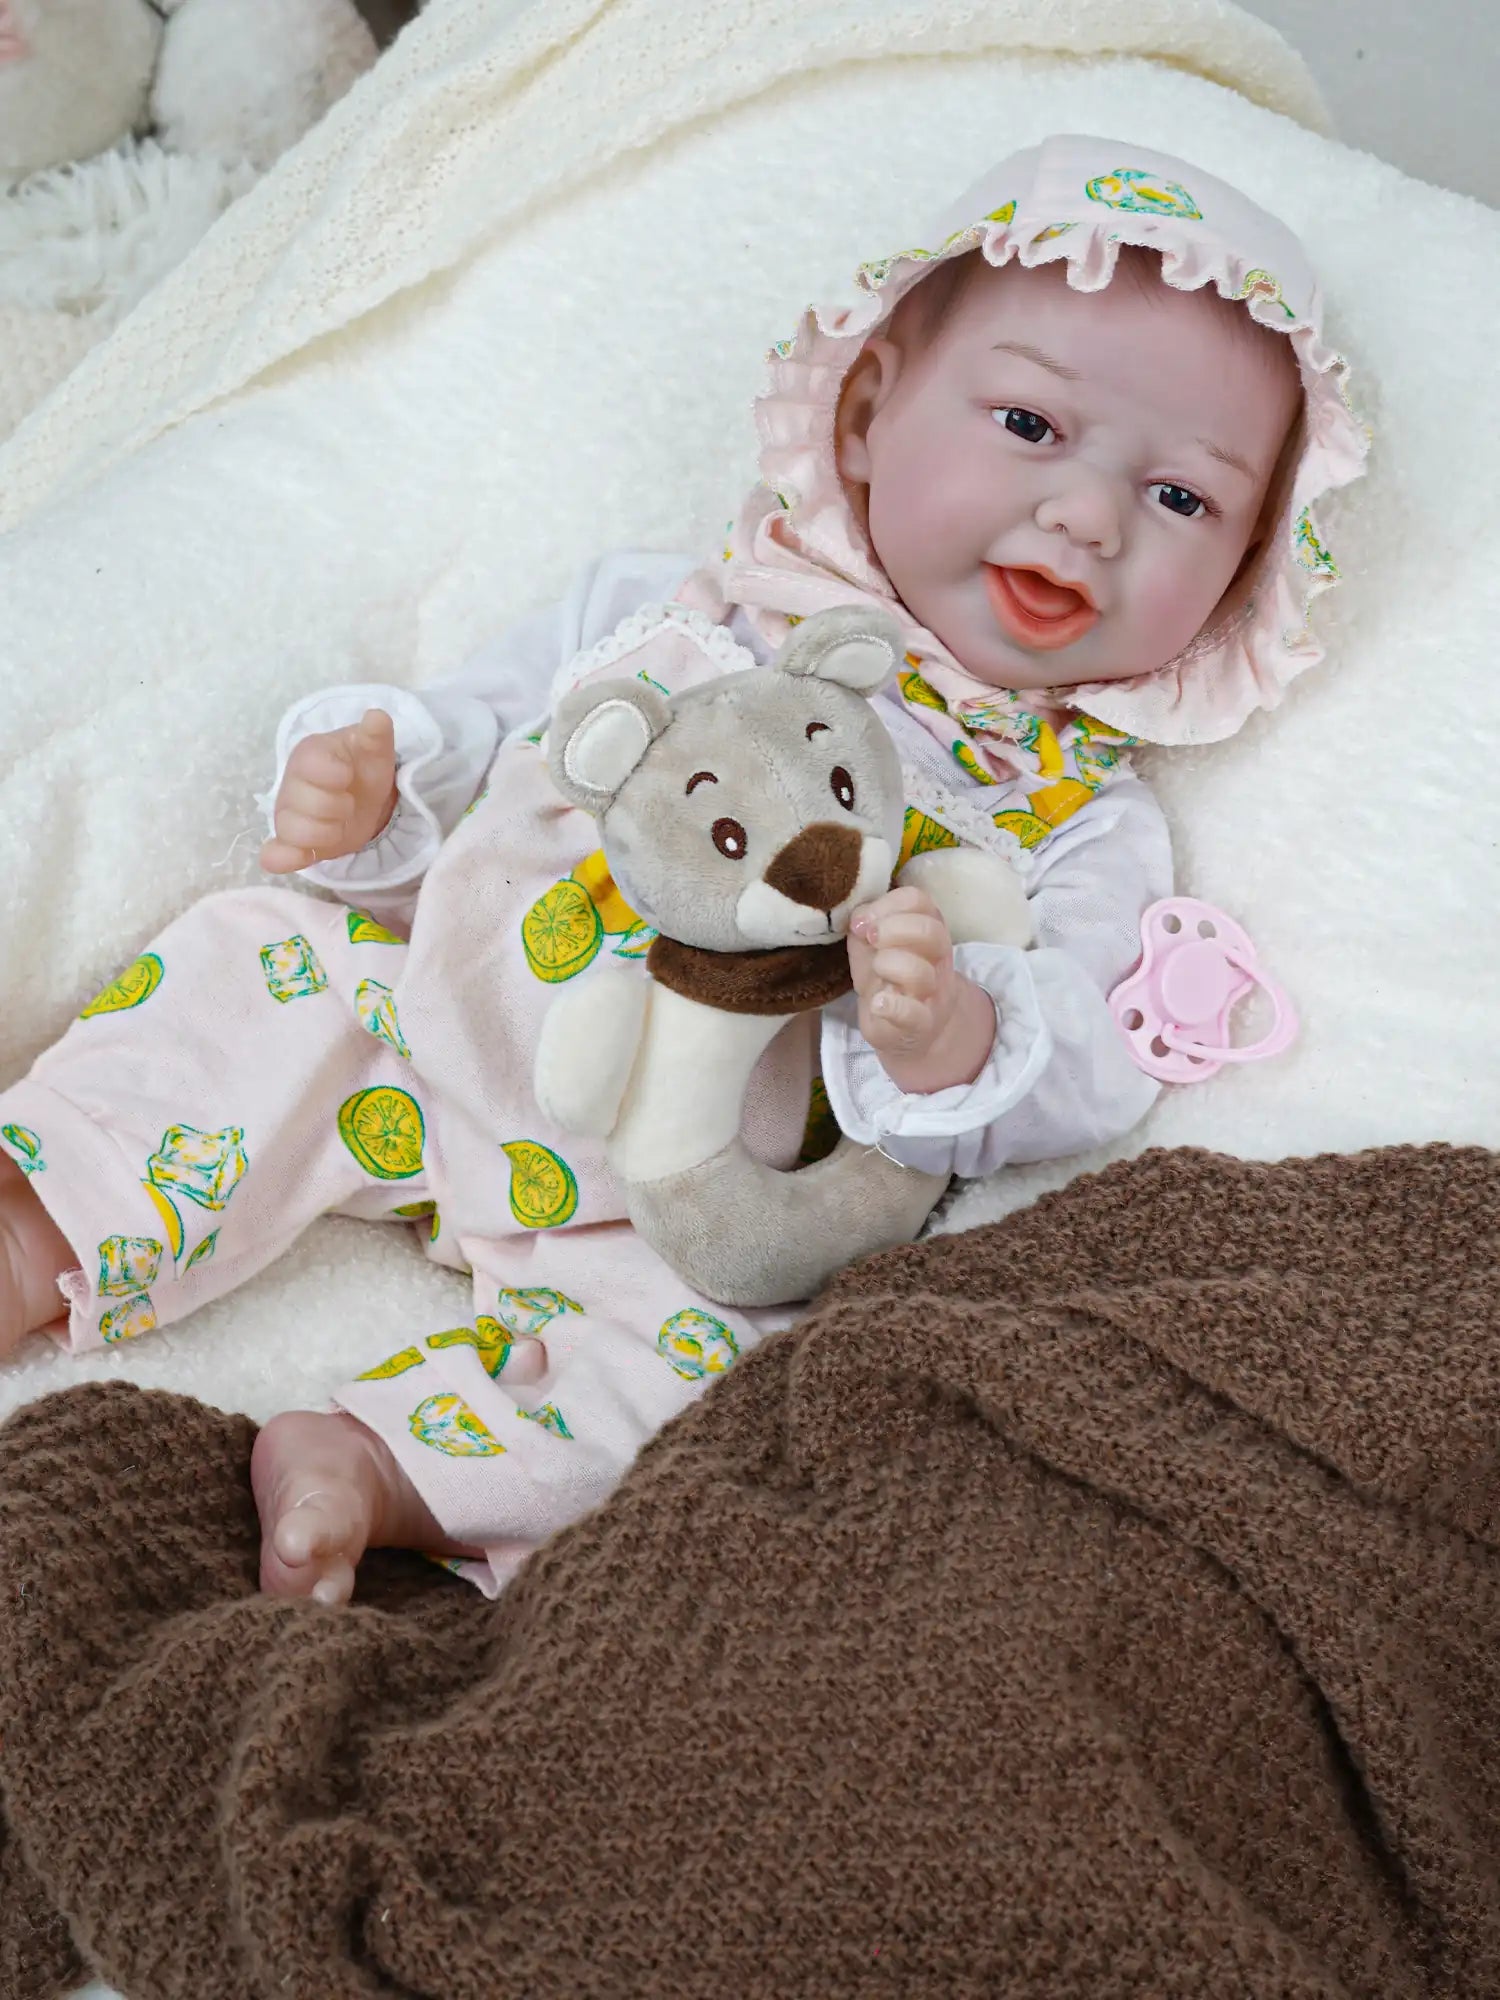 A cute reborn baby doll lying on the sofa holding a teddy bear doll